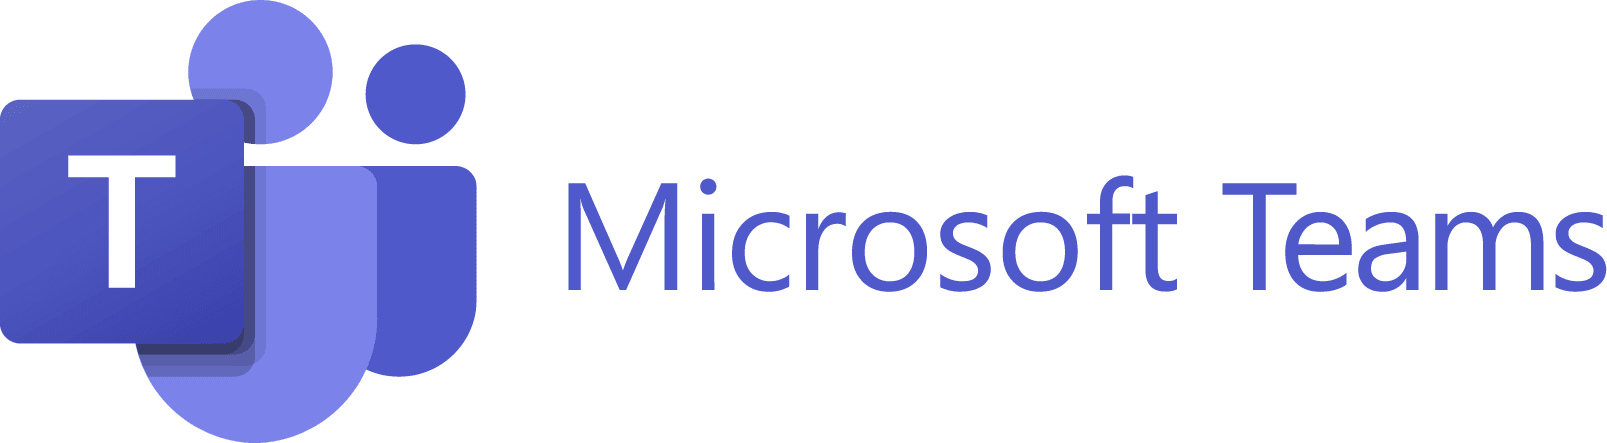 Www teams com. Team логотип. Microsoft Teams. Microsoft Teams иконка. Тимс логотип.